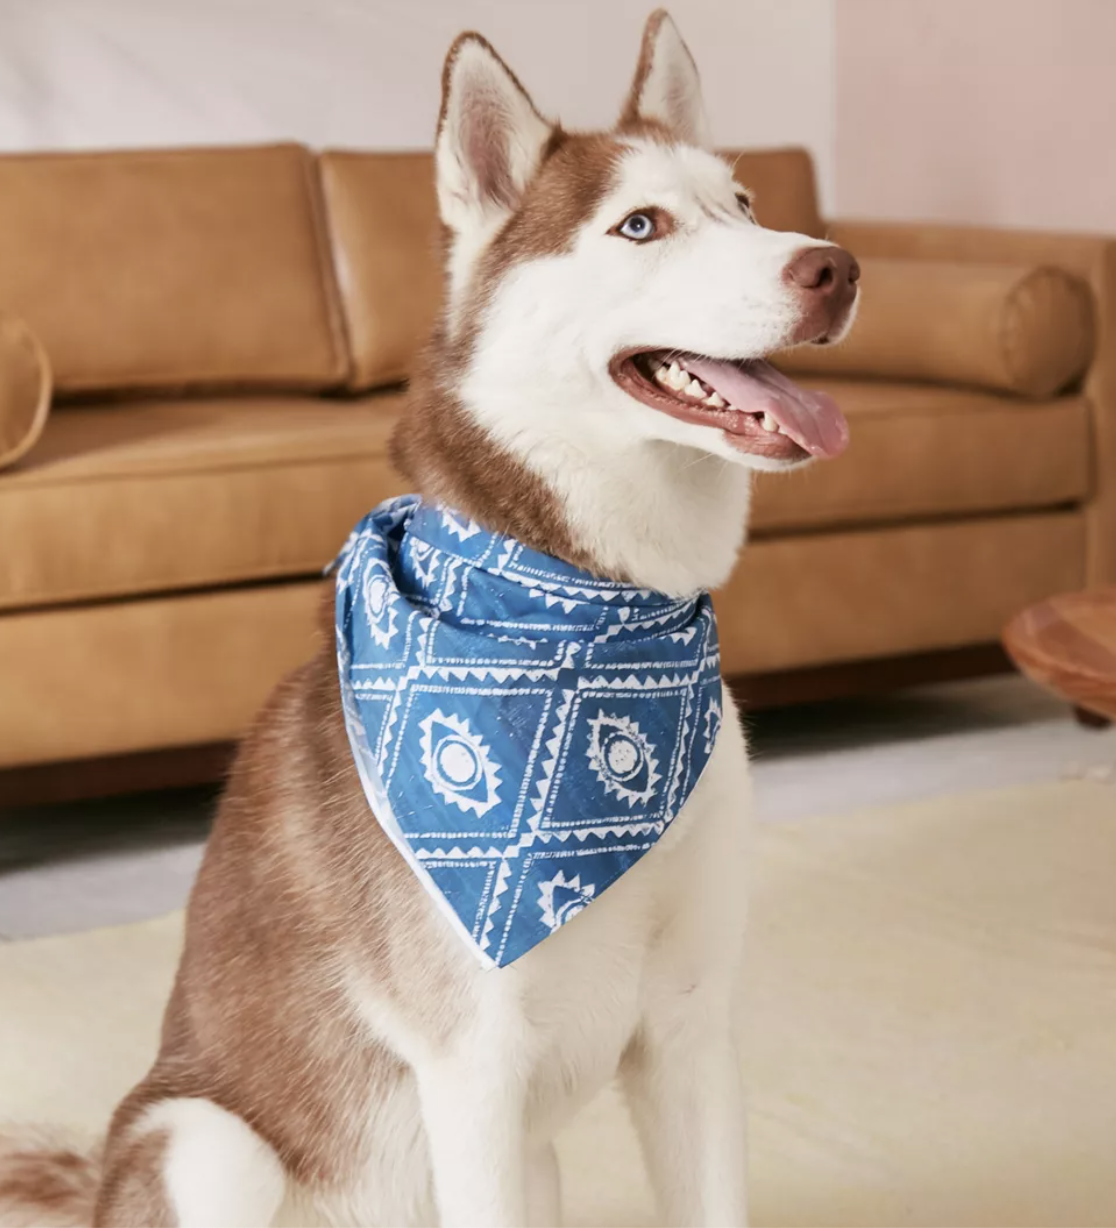 A husky wearing a bandana in a living room